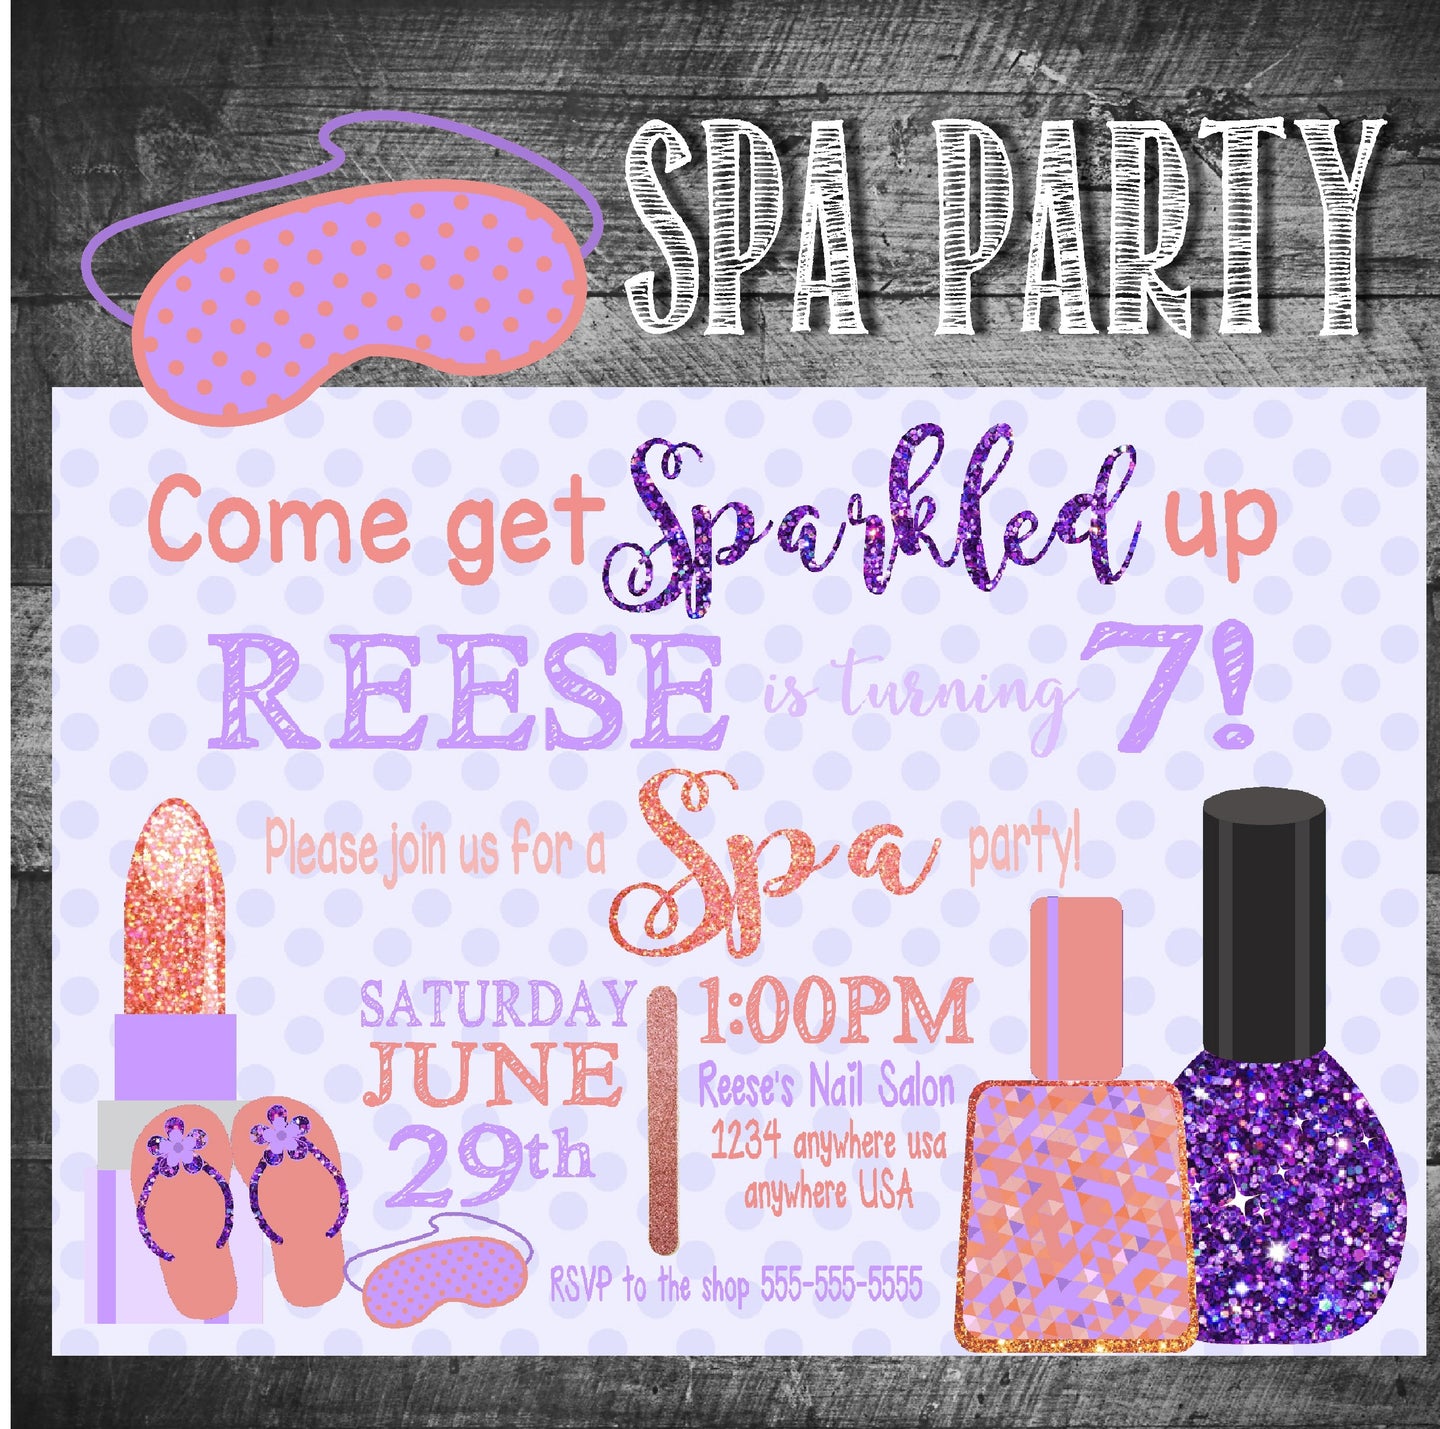 SPA PARTY Invitation Spa Invitation SPA Party Birthday Invitation | Manicure Pedicure | Spa Party Invite Spa Birthday Party Printable